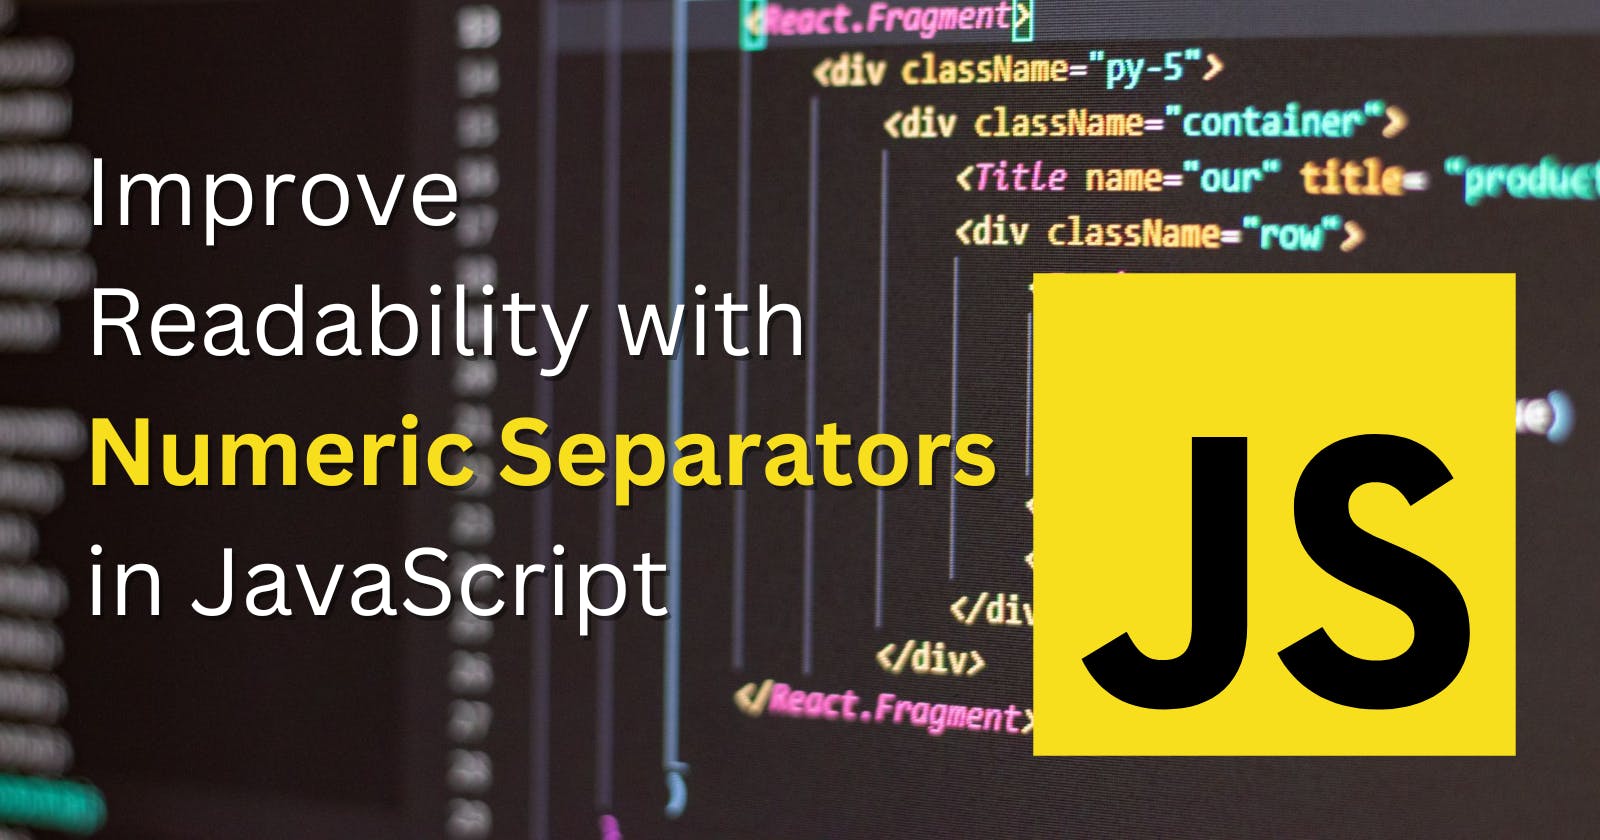 Improve Readability with Numeric Separators in JavaScript